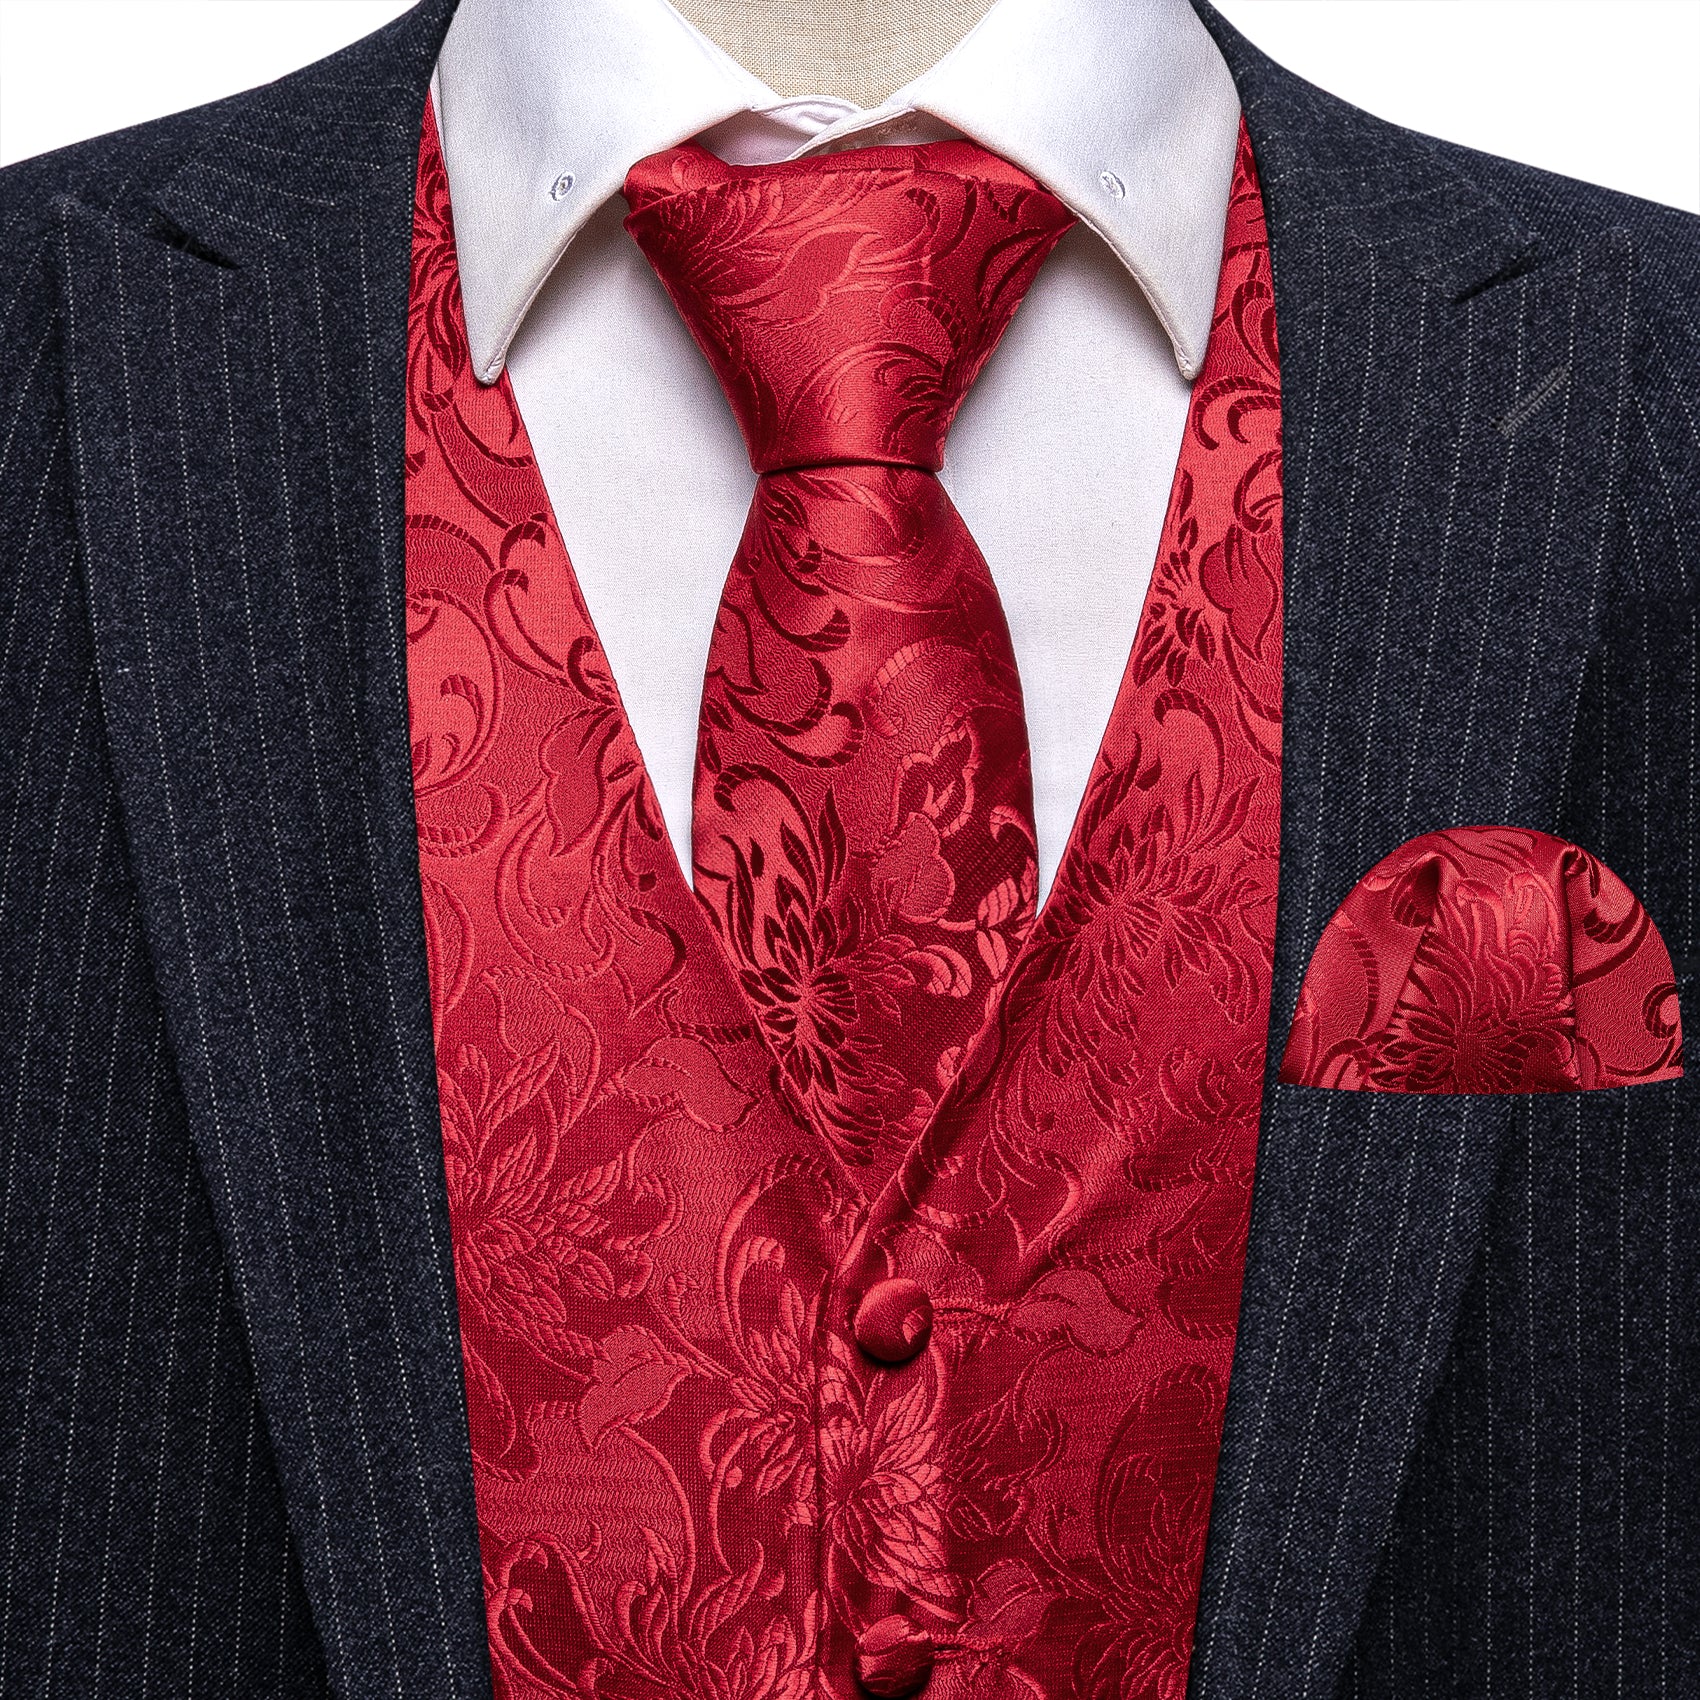 Red Paisley Silk V Neck Vest Tie Pocket Square Cufflinks Set